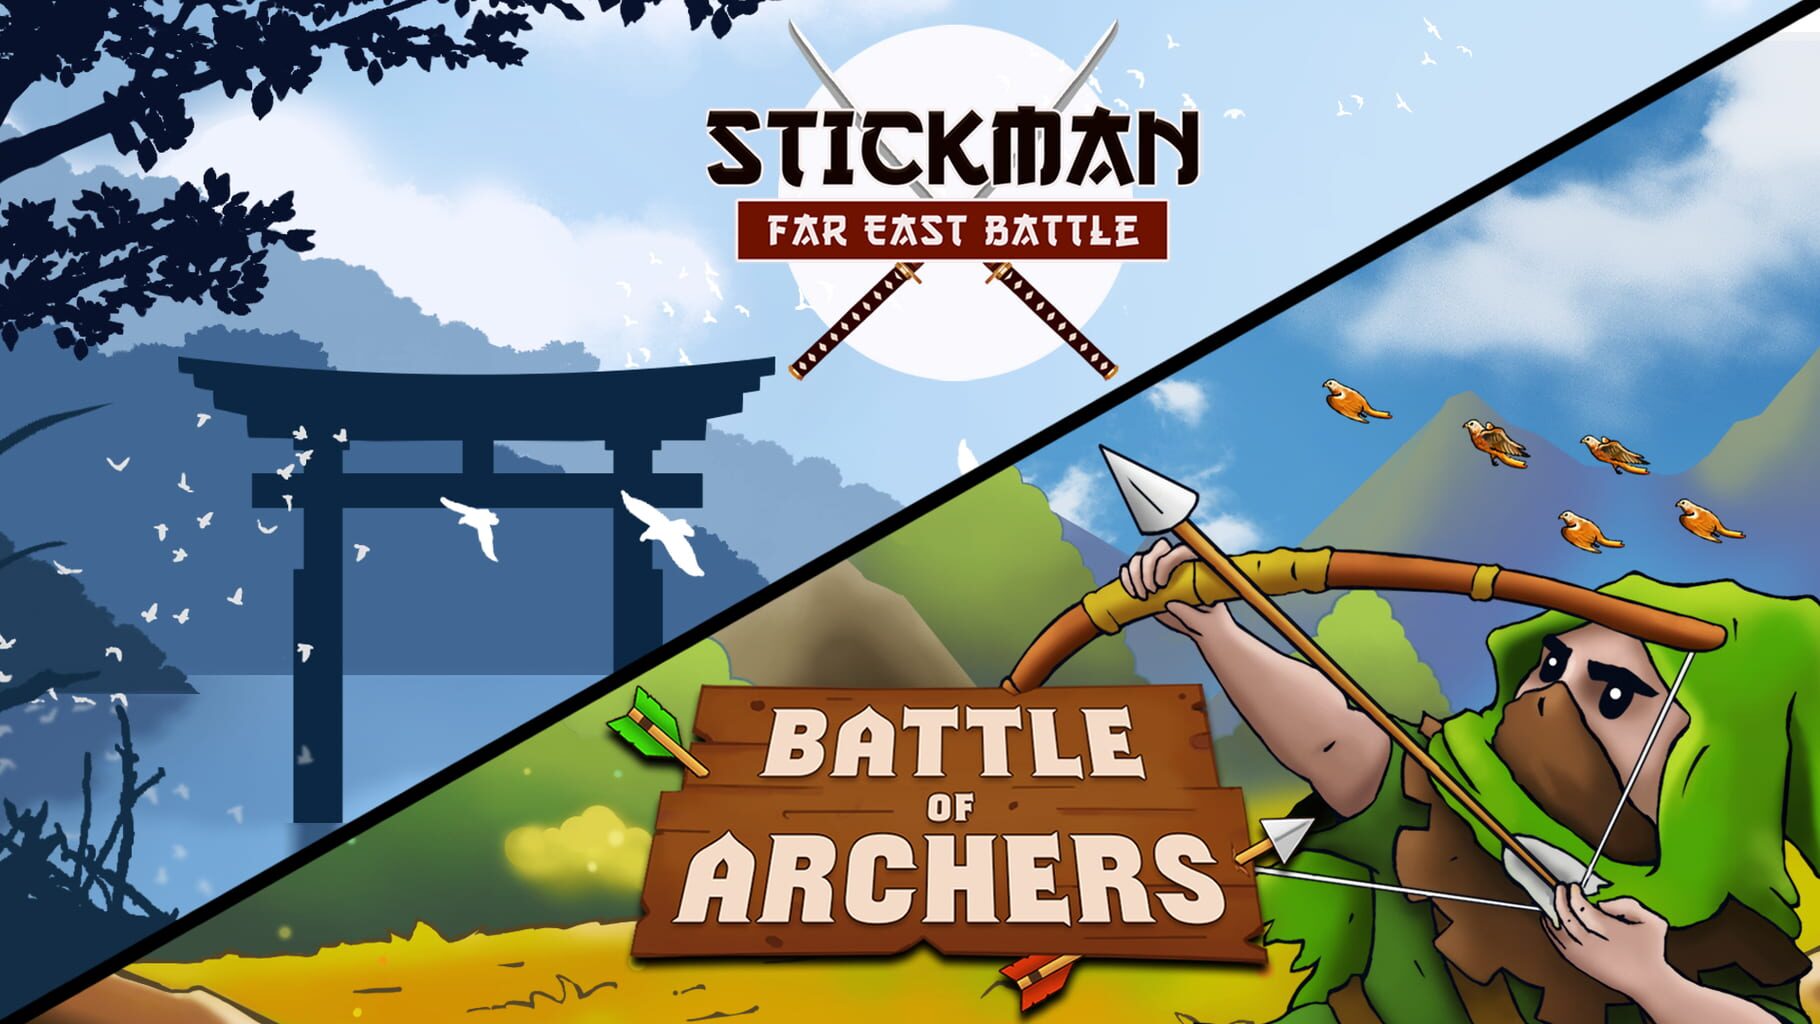 Battle Bundle I Stickman: Far East Battle and Battle of Archers artwork